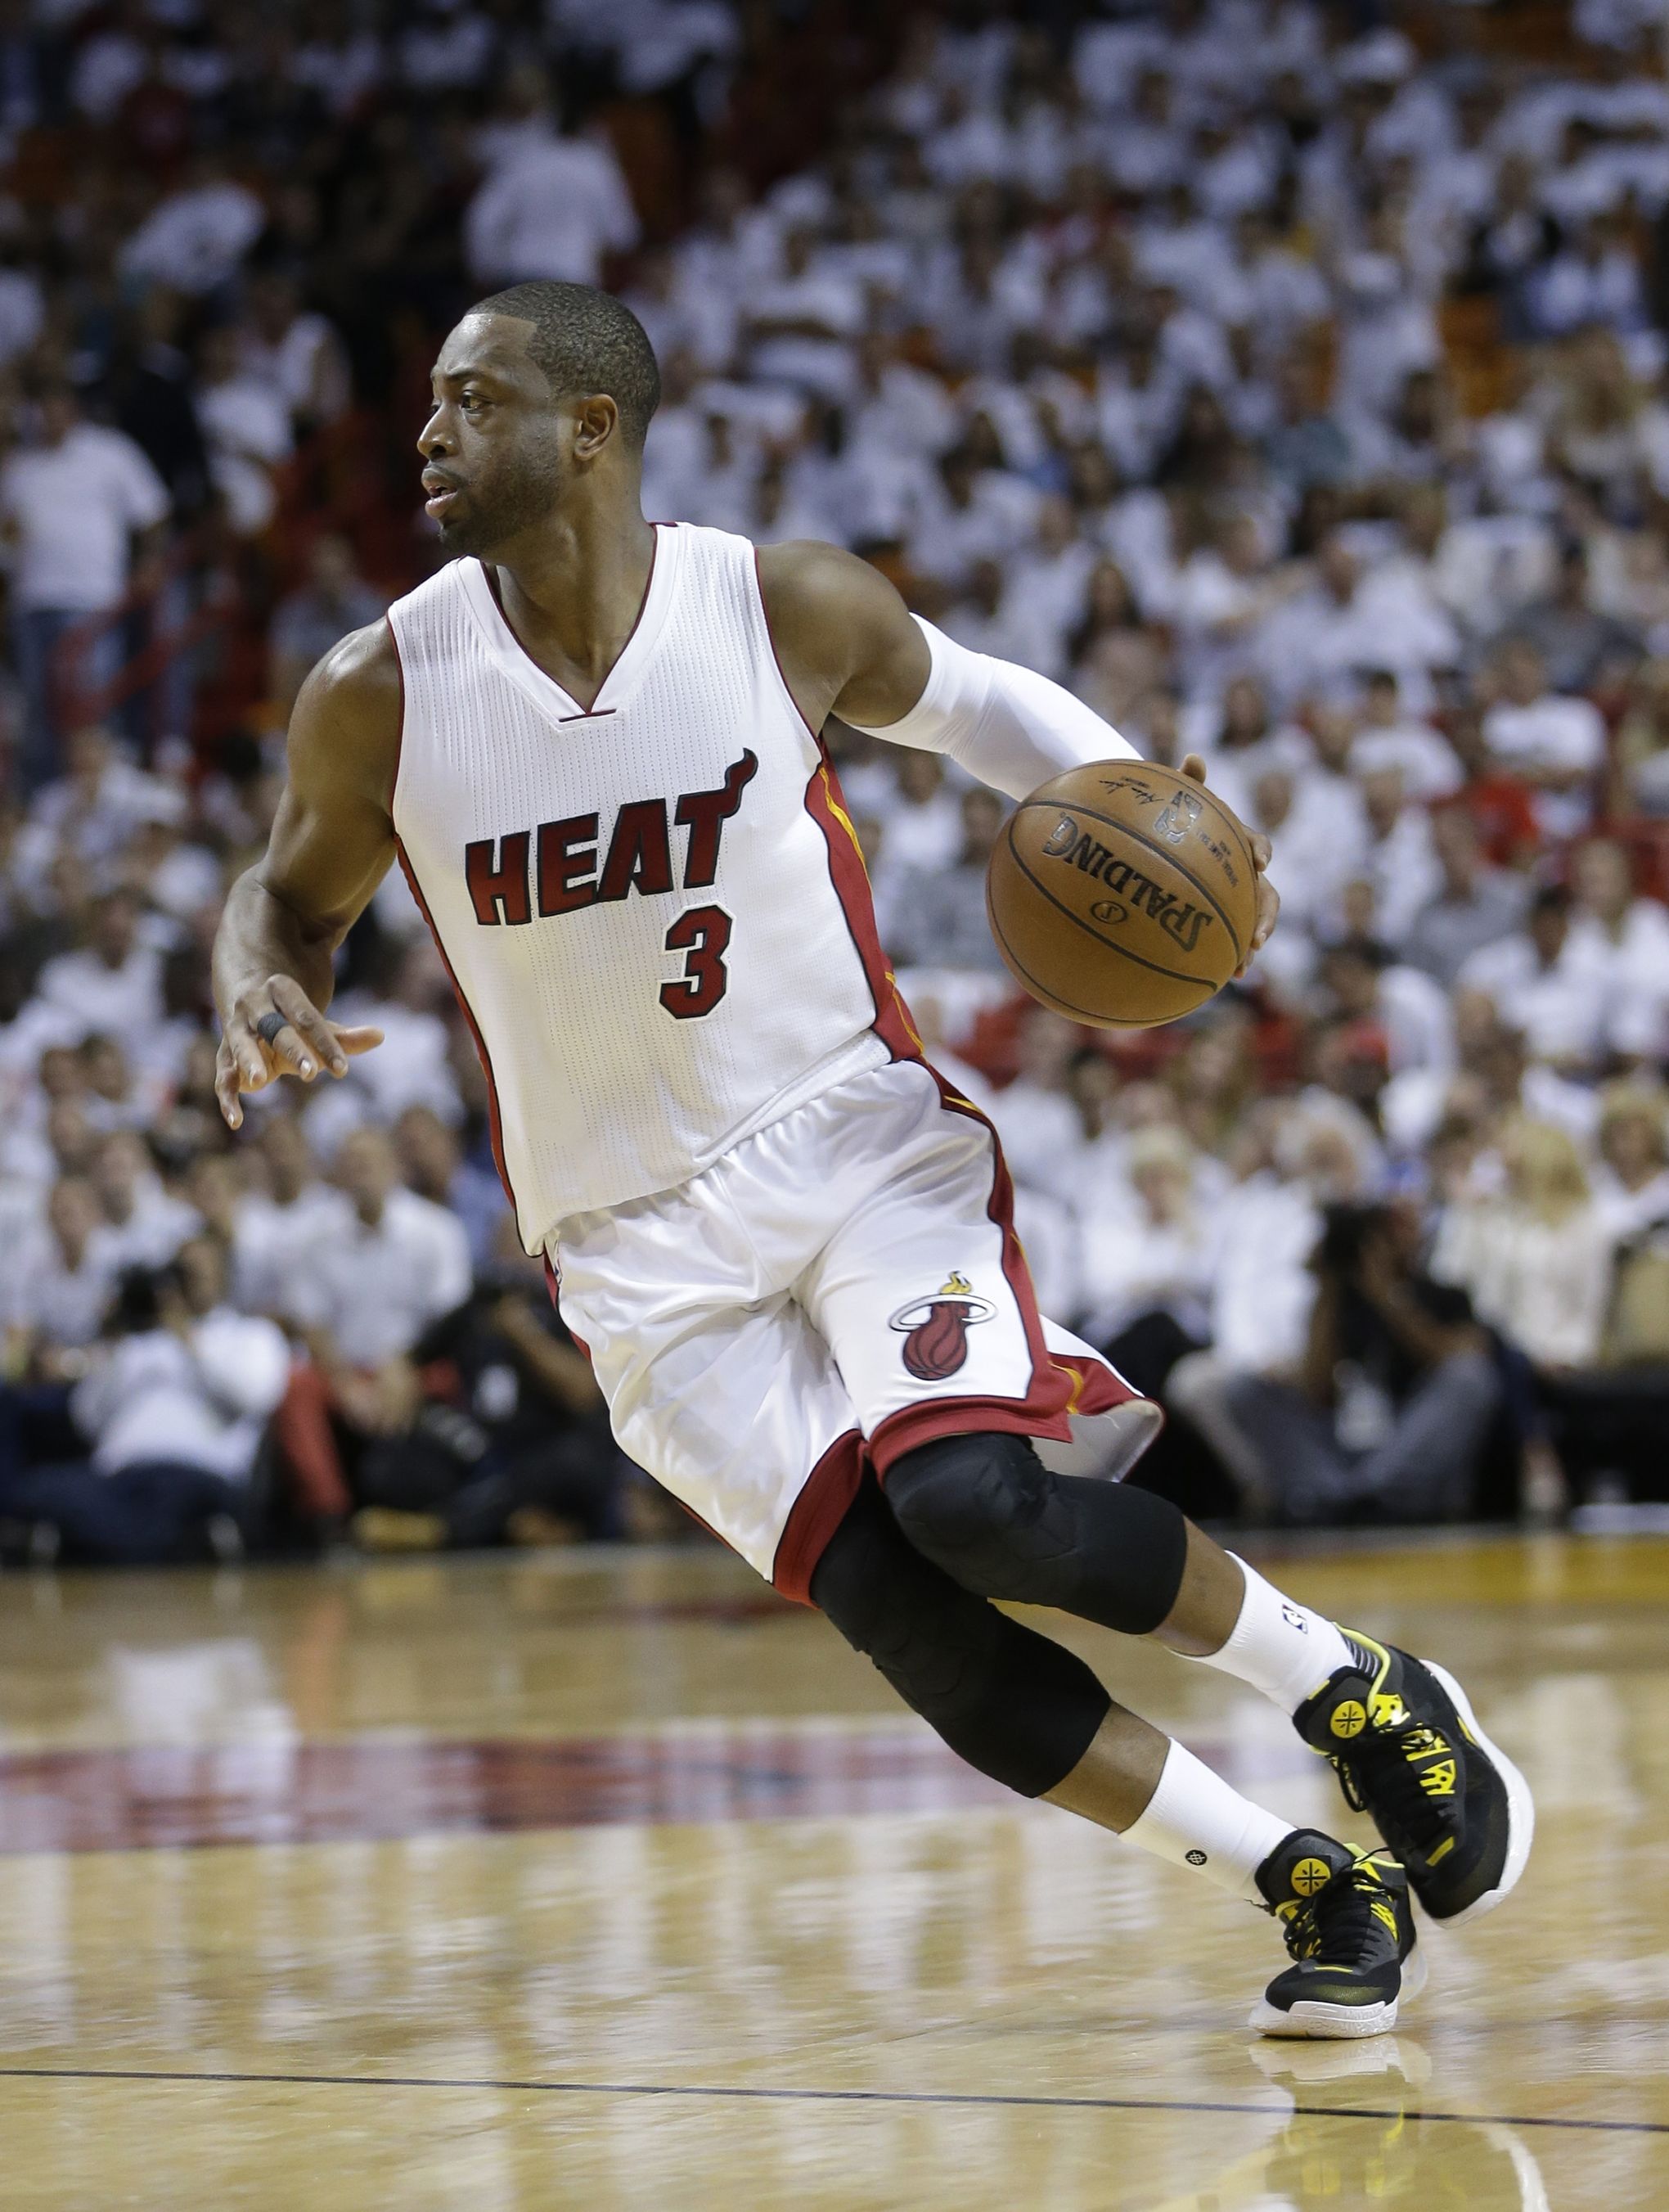 Miami Heat found their icon in Dwyane Wade - ESPN